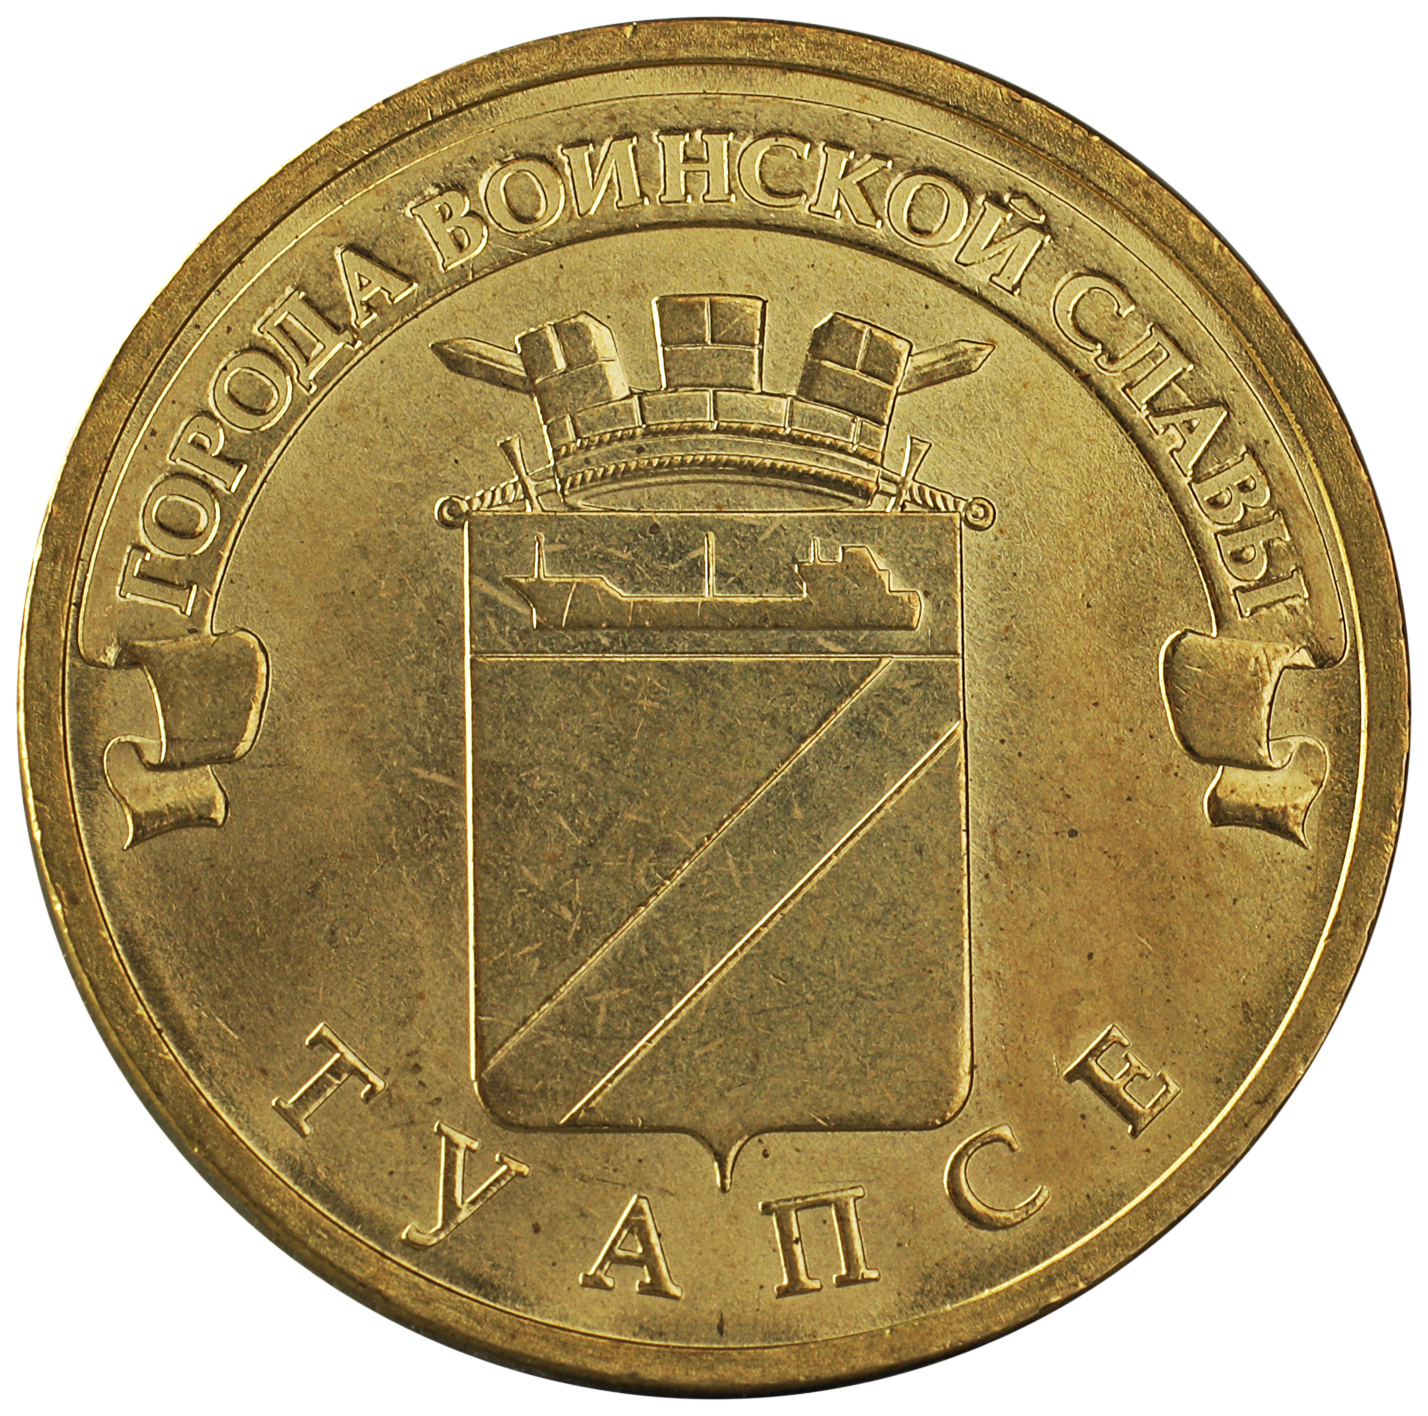 Туапсе 10 рублей 2012 (ГВС)